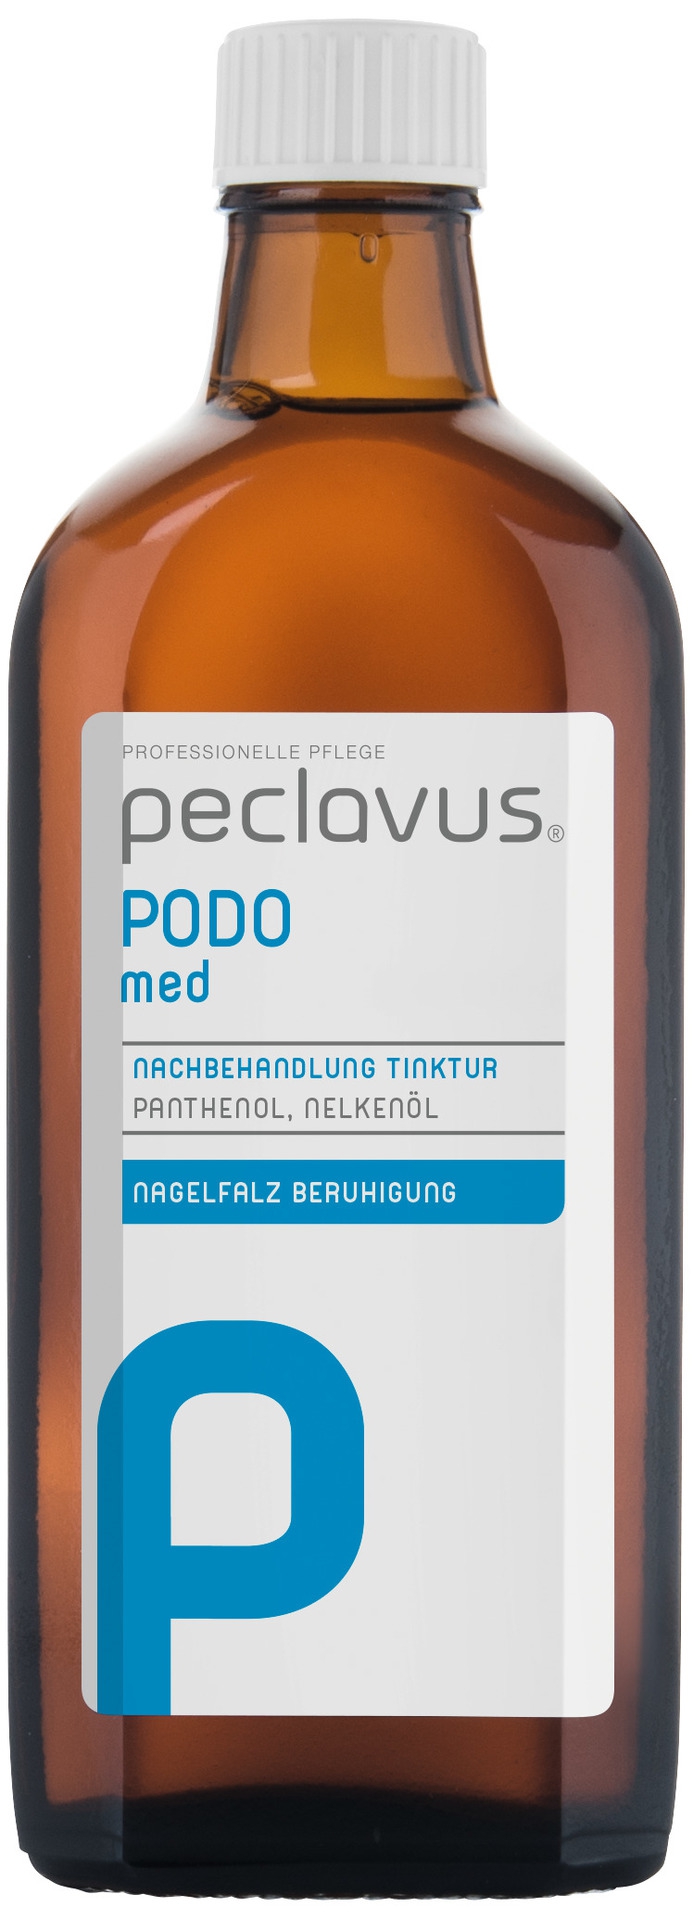 Peclavus PODOmed Nachbehandlung Tinktur | 200 ml